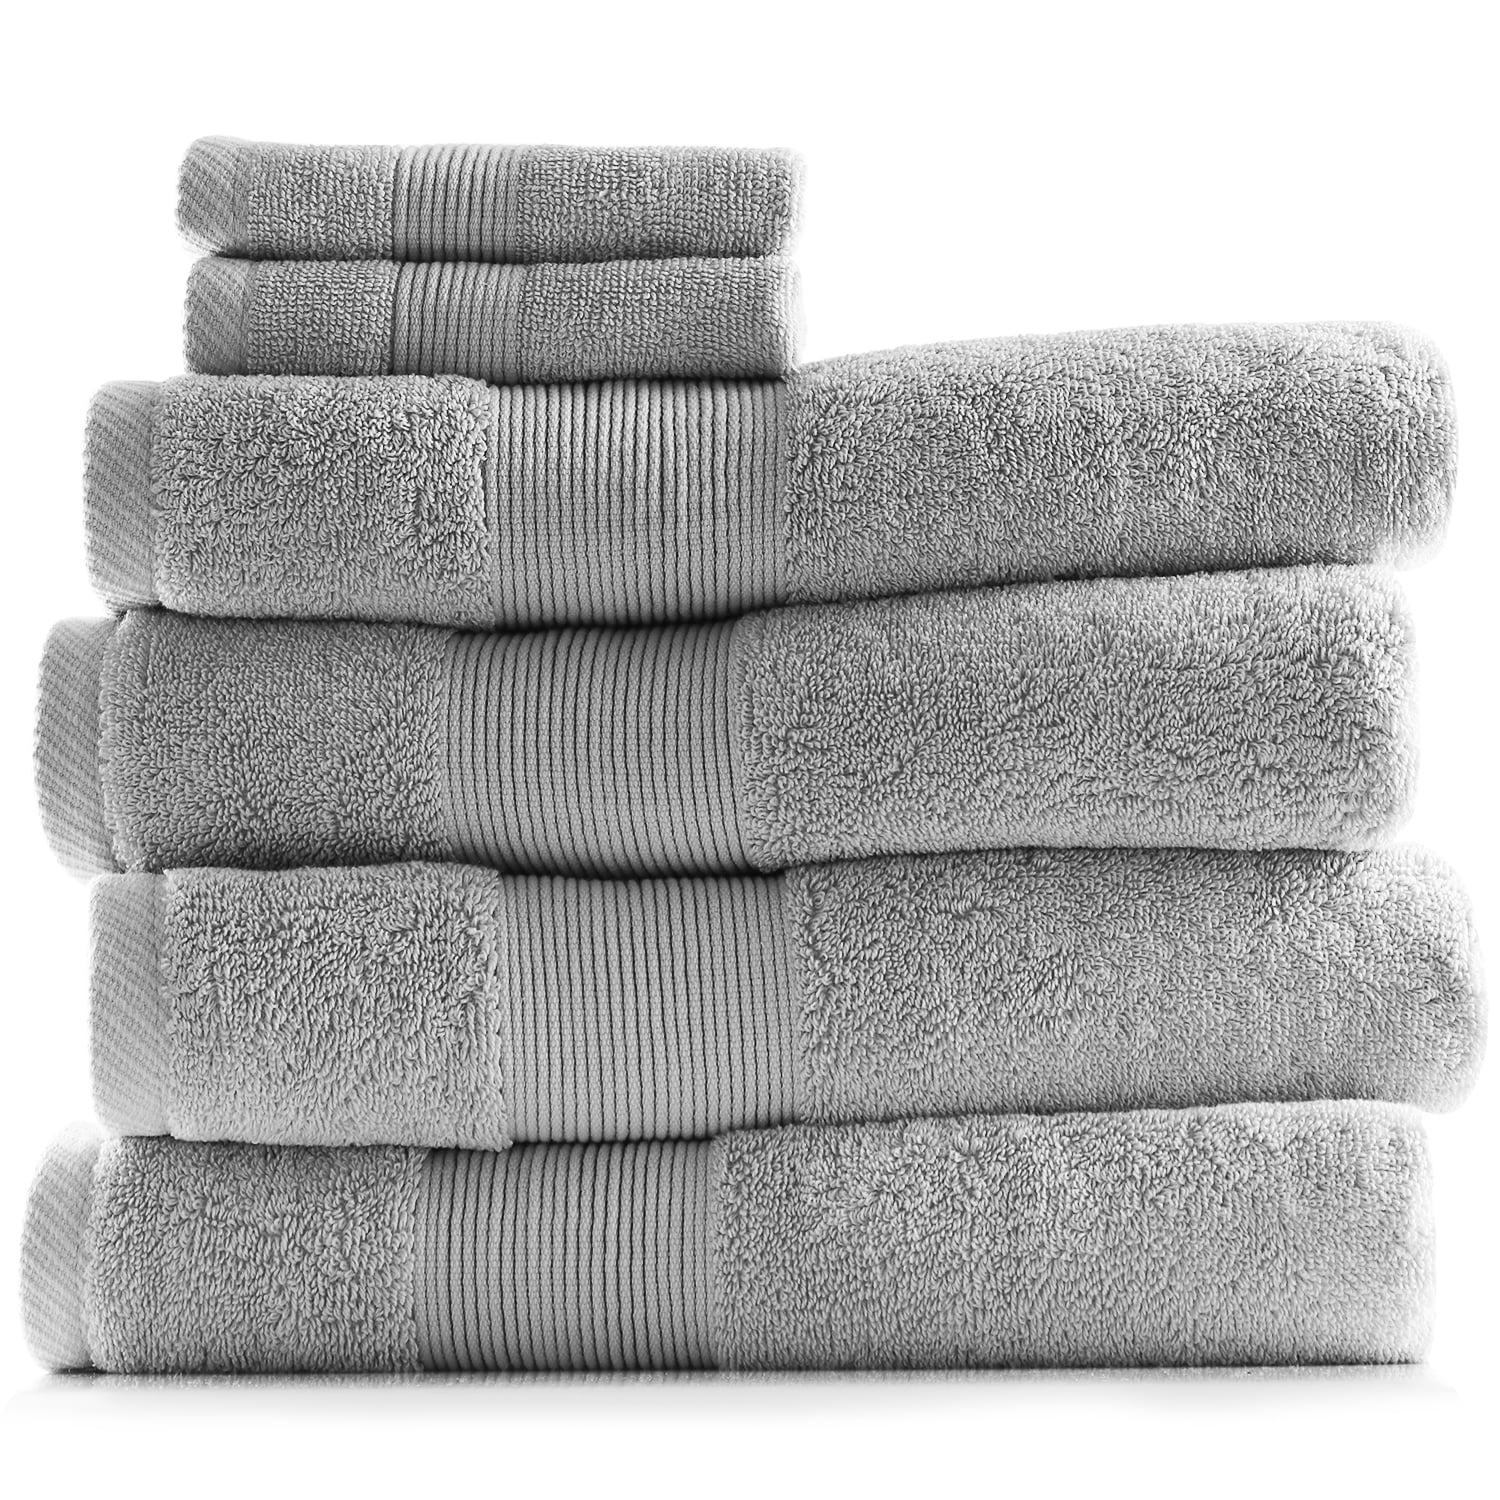 4 Pcs Bath Towel Set Hotel Quality Bath Towels 28x 55 Cotton High Absorbent Spa 